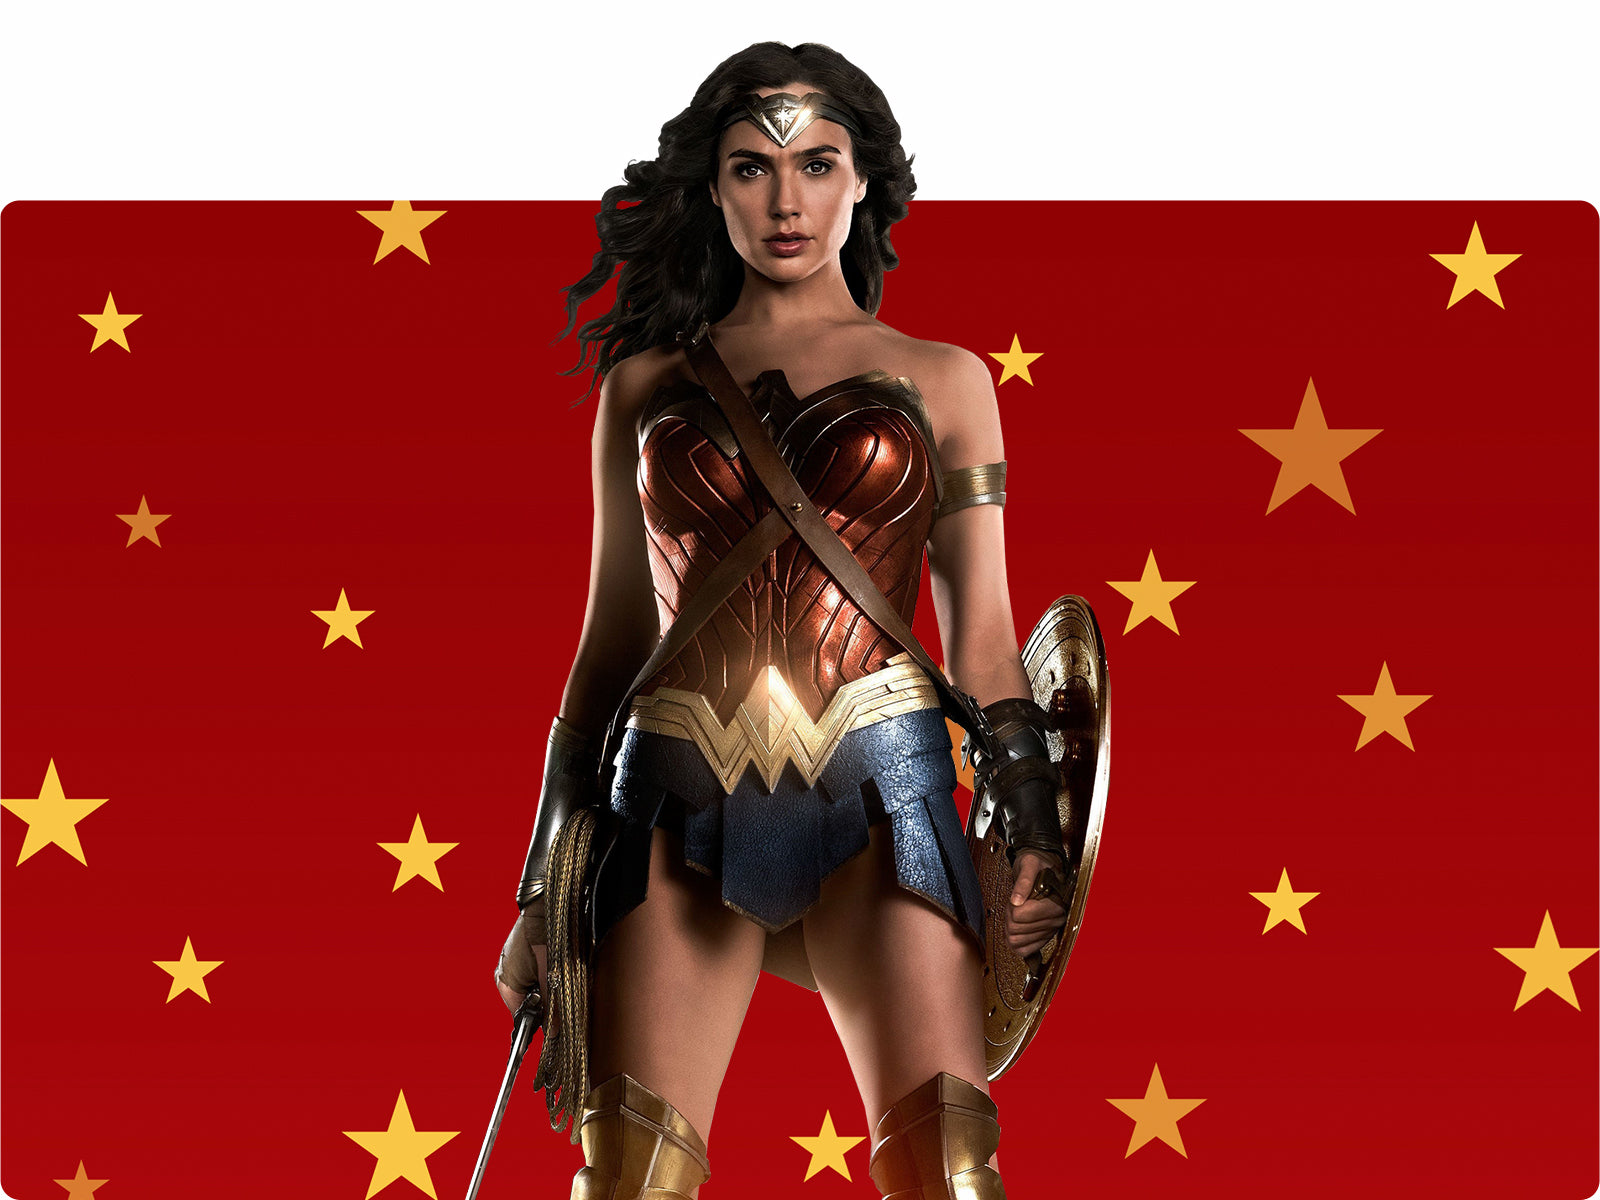 Women's DC Wonder Woman Classic Long Sleeve Dress with Cape